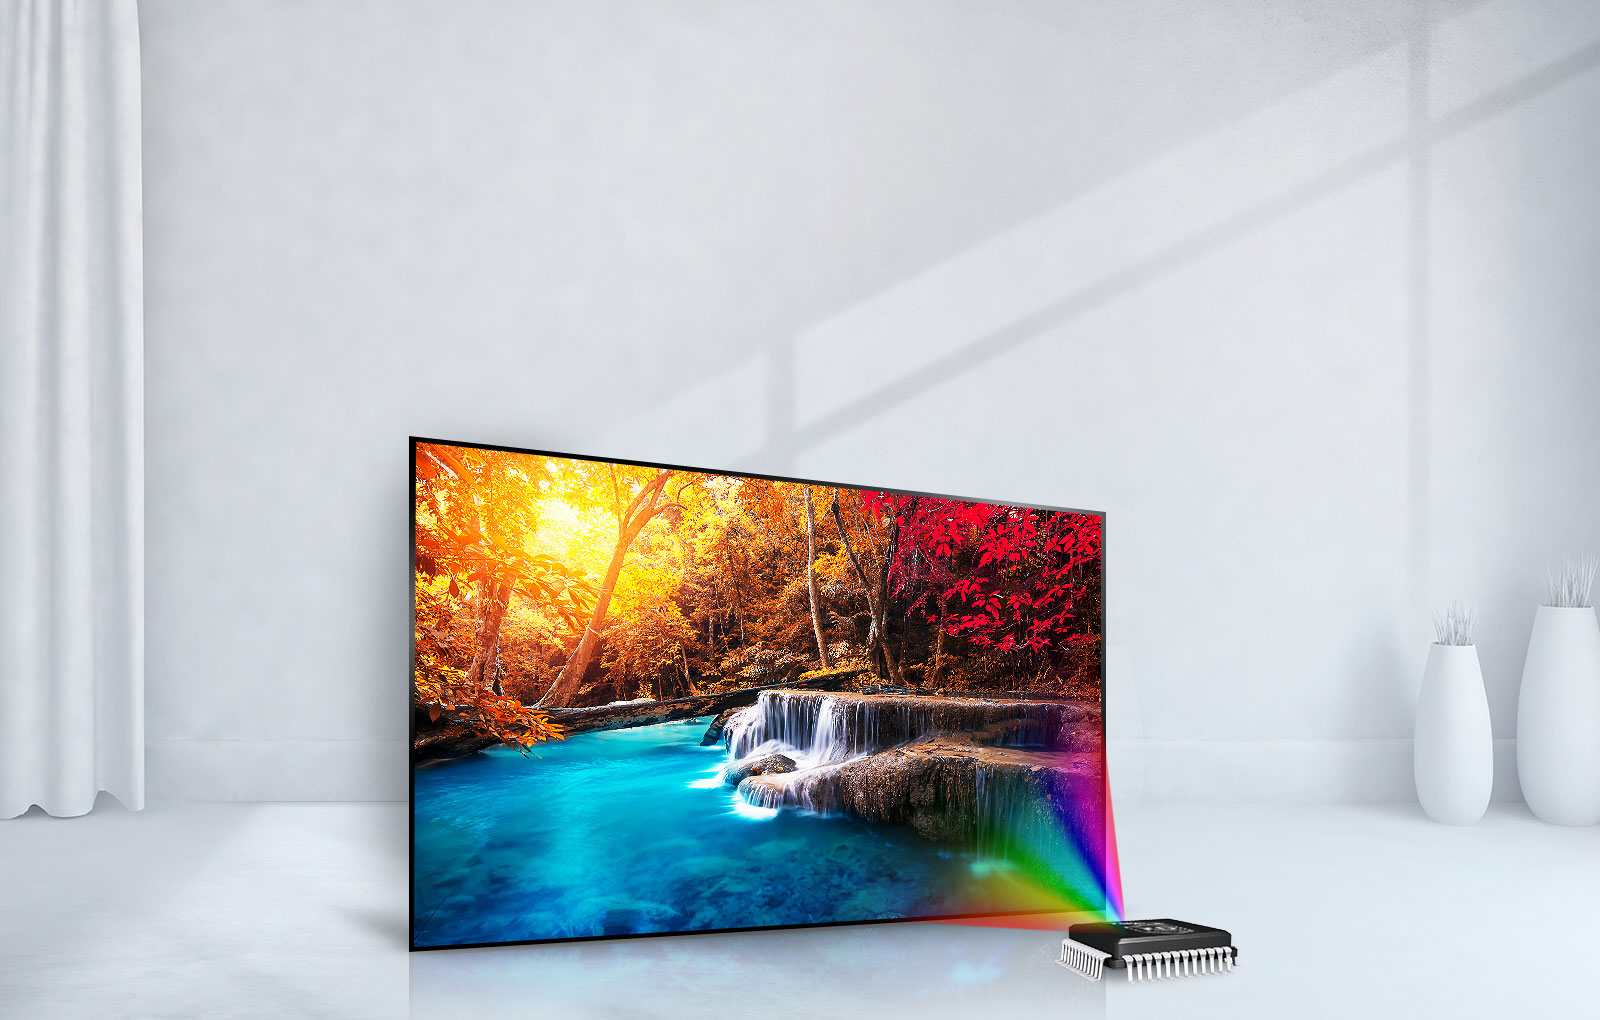 تلویزیون اسمارت ال جی LED TV Smart LG 49LJ62000GI - سایز 49 اینچ